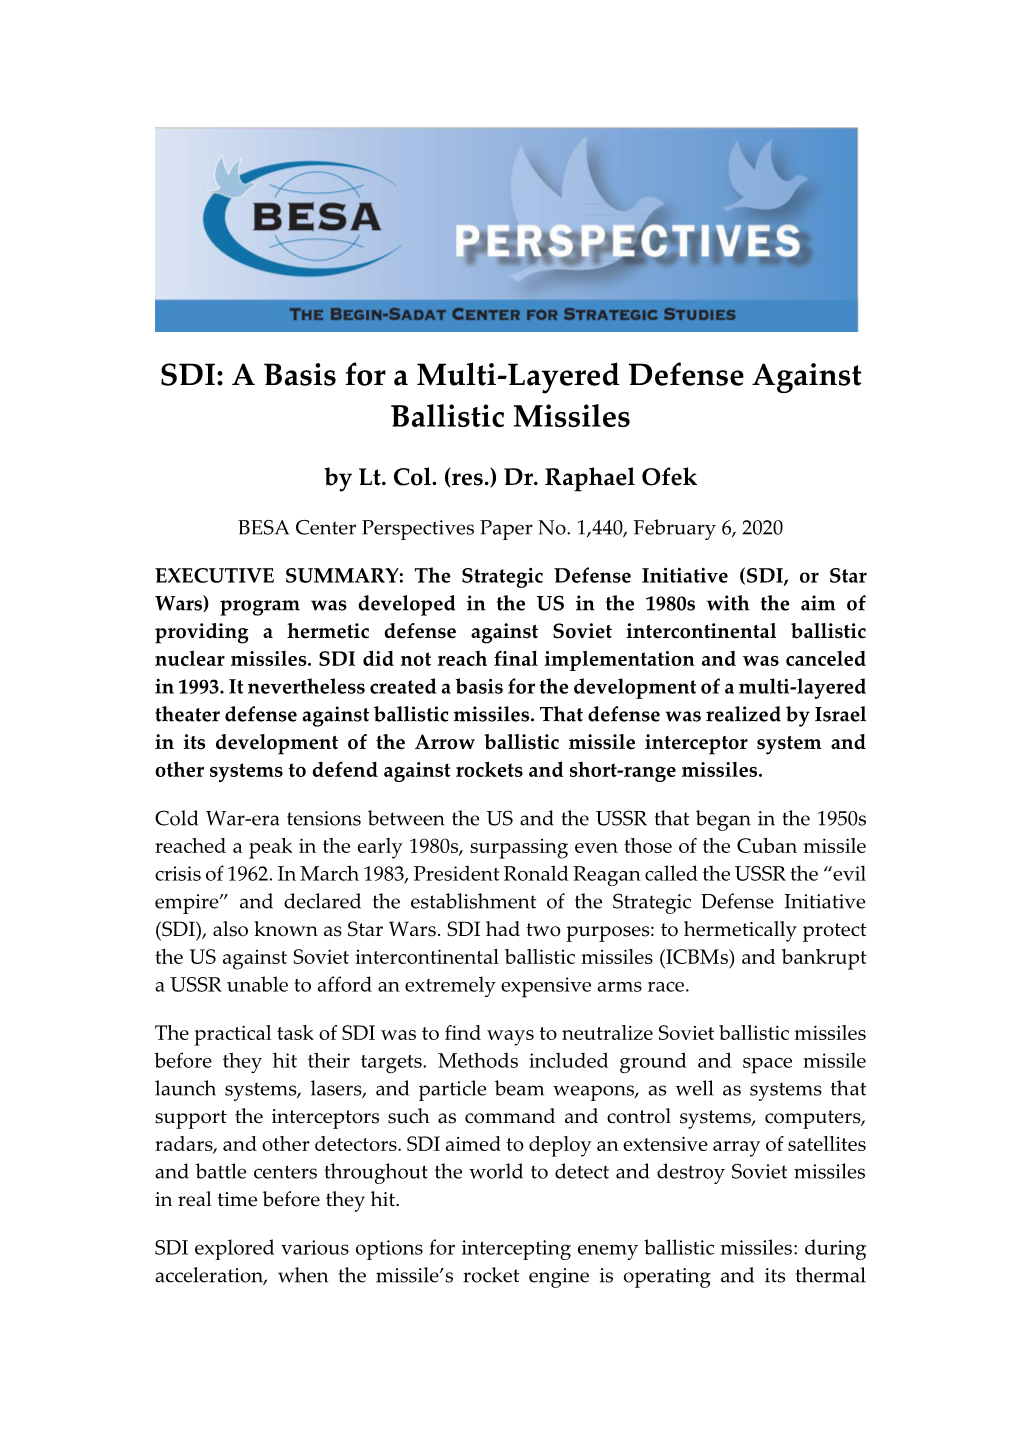 SDI: a Basis for a Multi-Layered Defense Against Ballistic Missiles